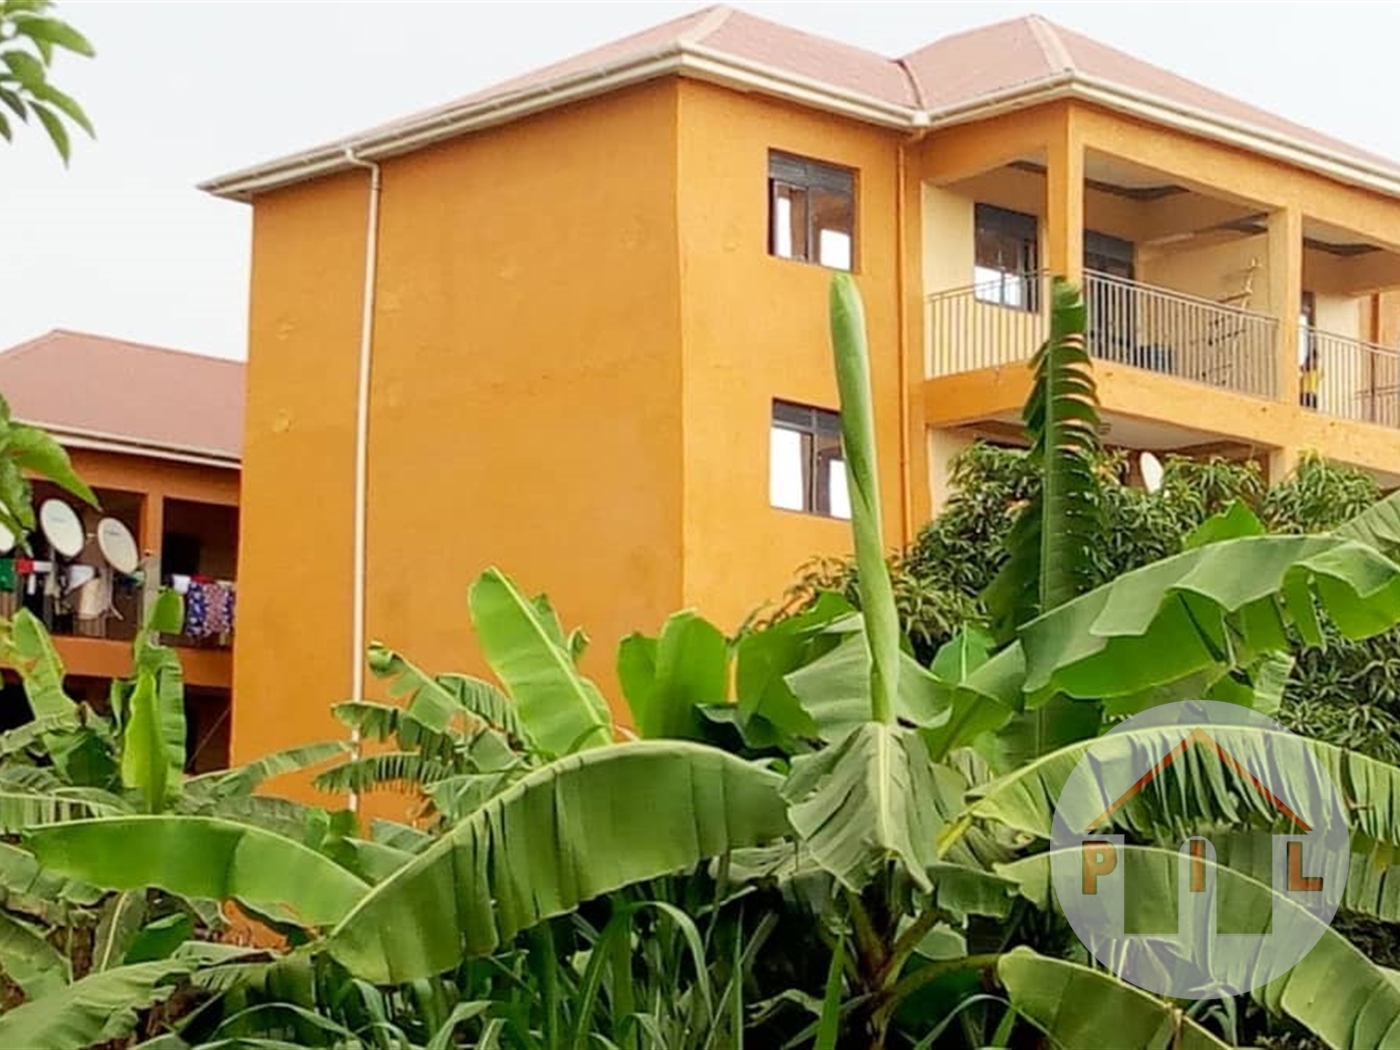 Apartment block for sale in Nateete Kampala